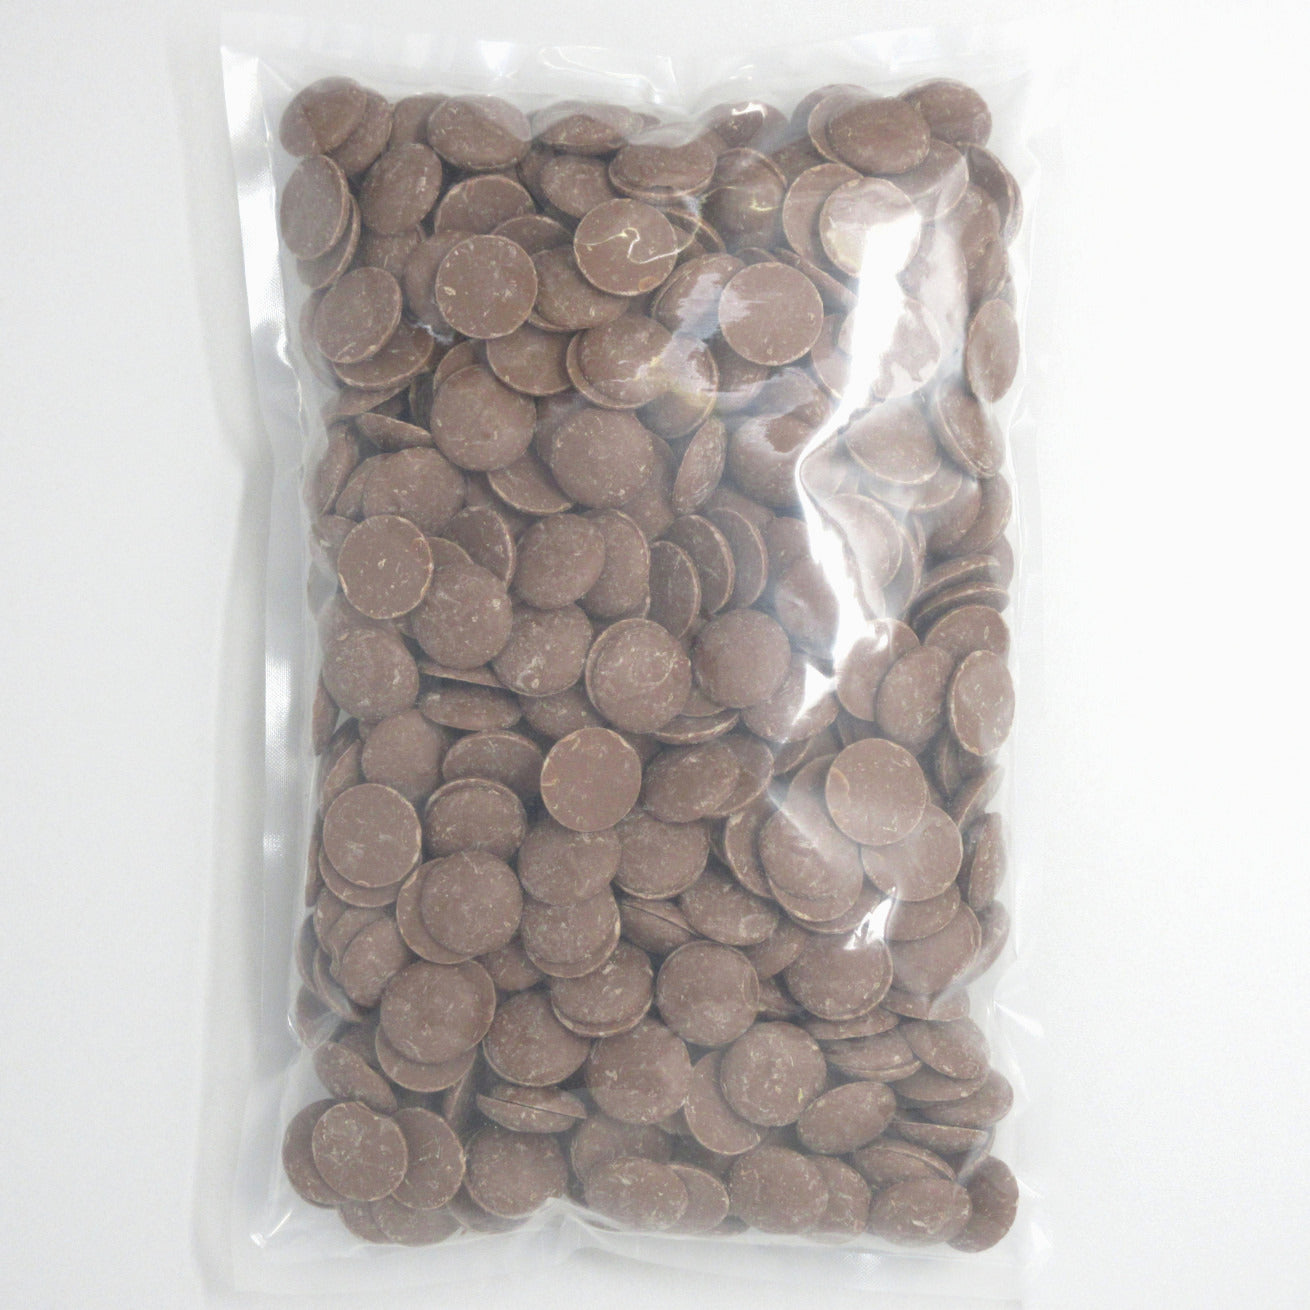 Flour Barrel product image - Merckens Lite Chocolate